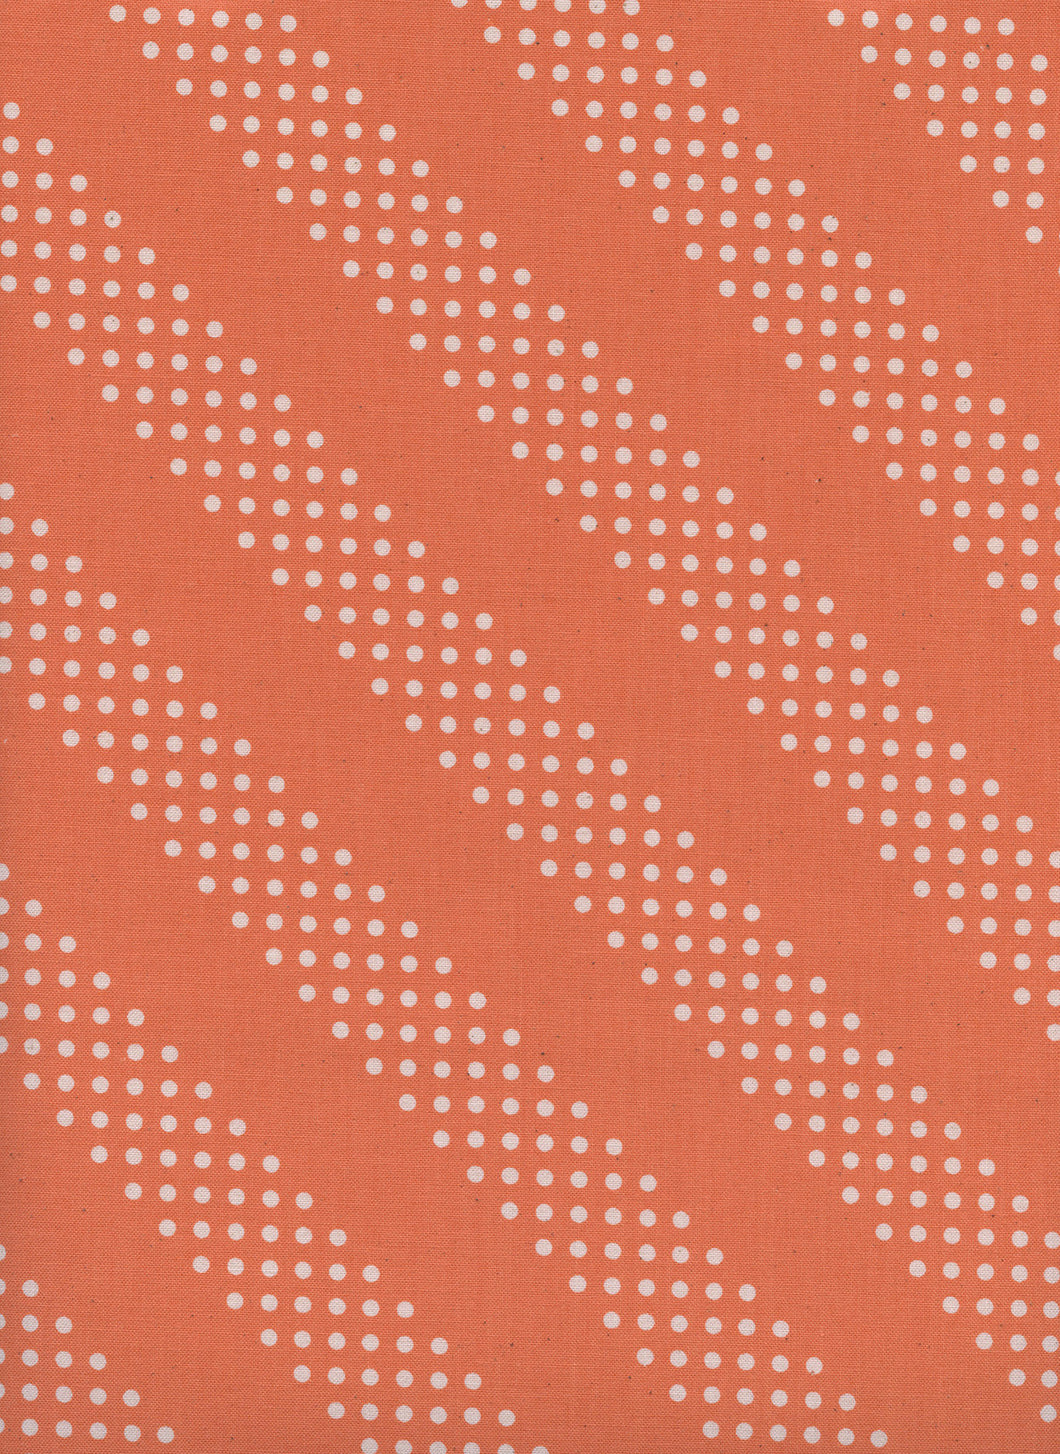 Dottie in Tangerine, Cotton+Steel Basics, Rashida Coleman Hale, RJR Fabrics, 100% Cotton Fabric, 5002-018